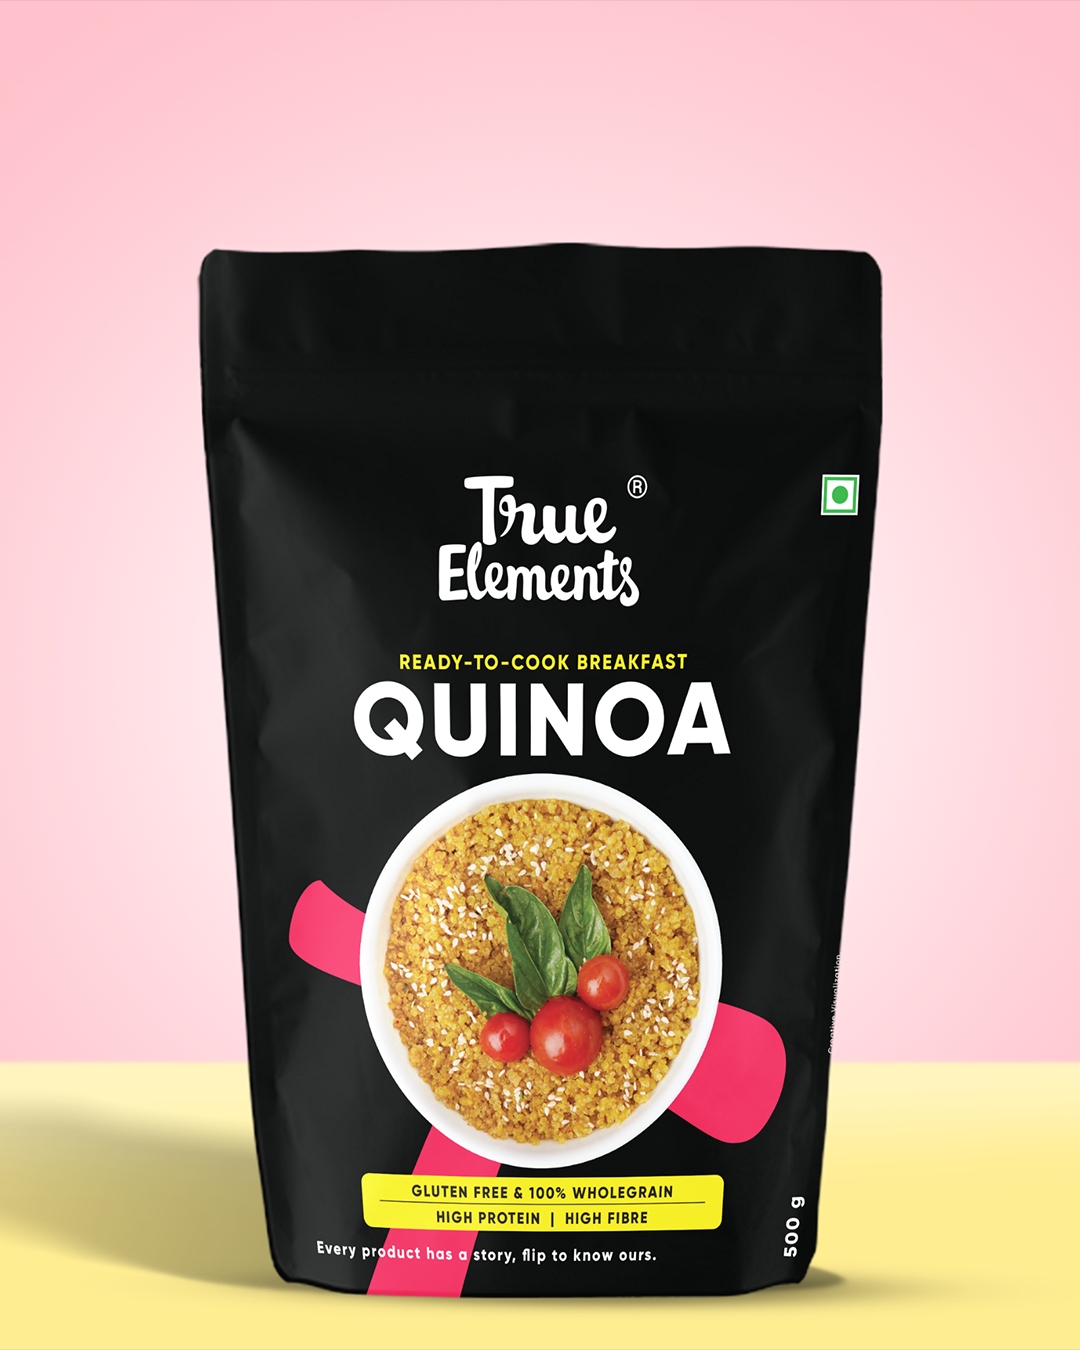 True Elements Quinoa Image